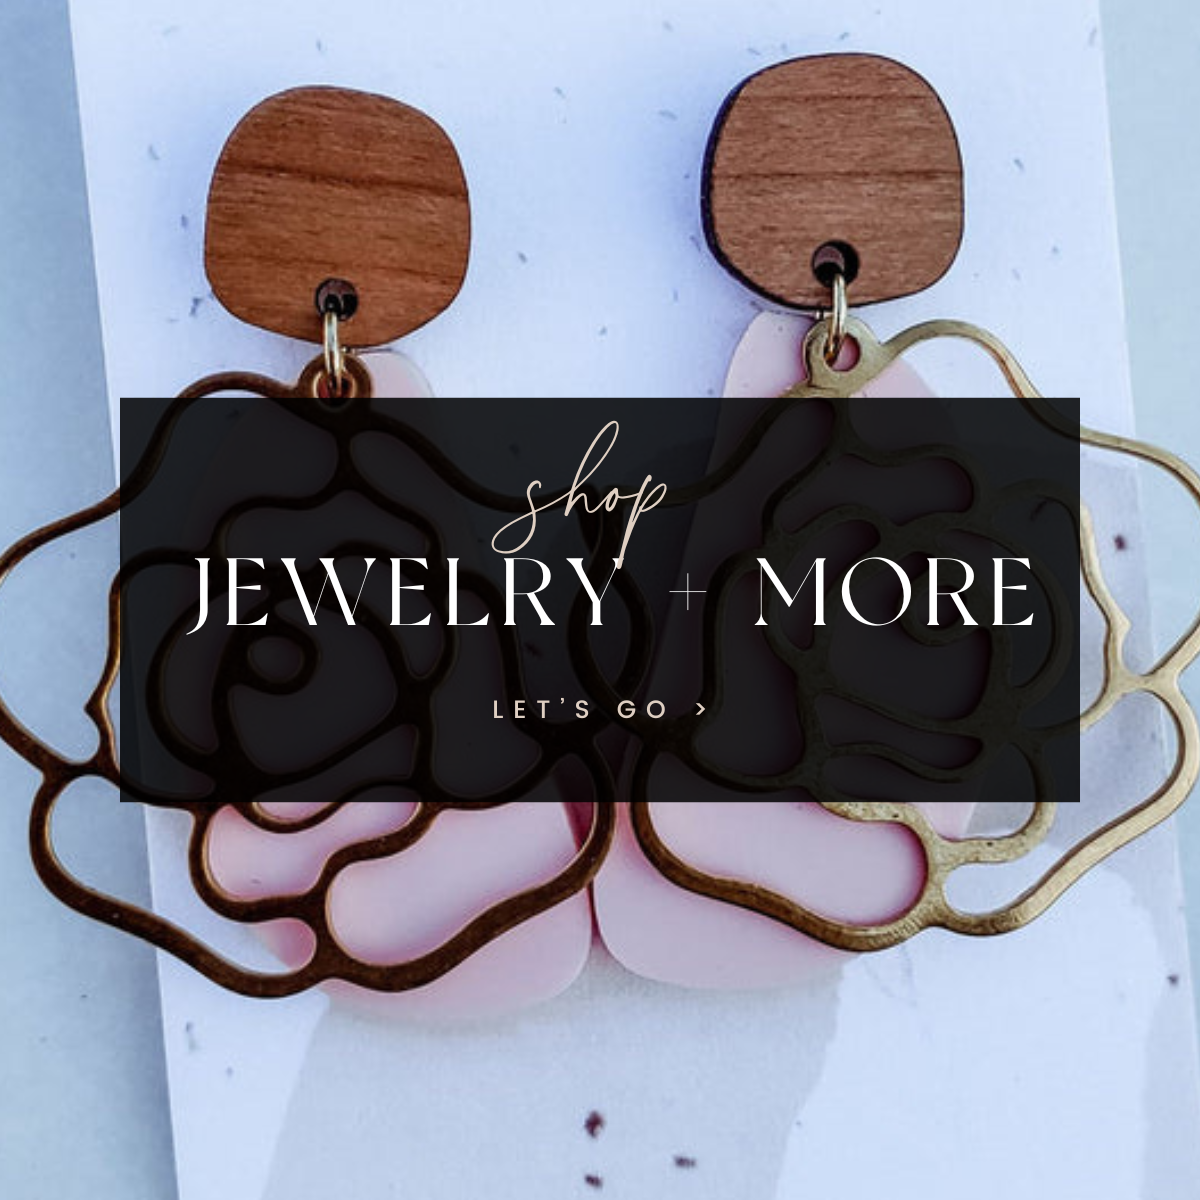 Jewelry + More